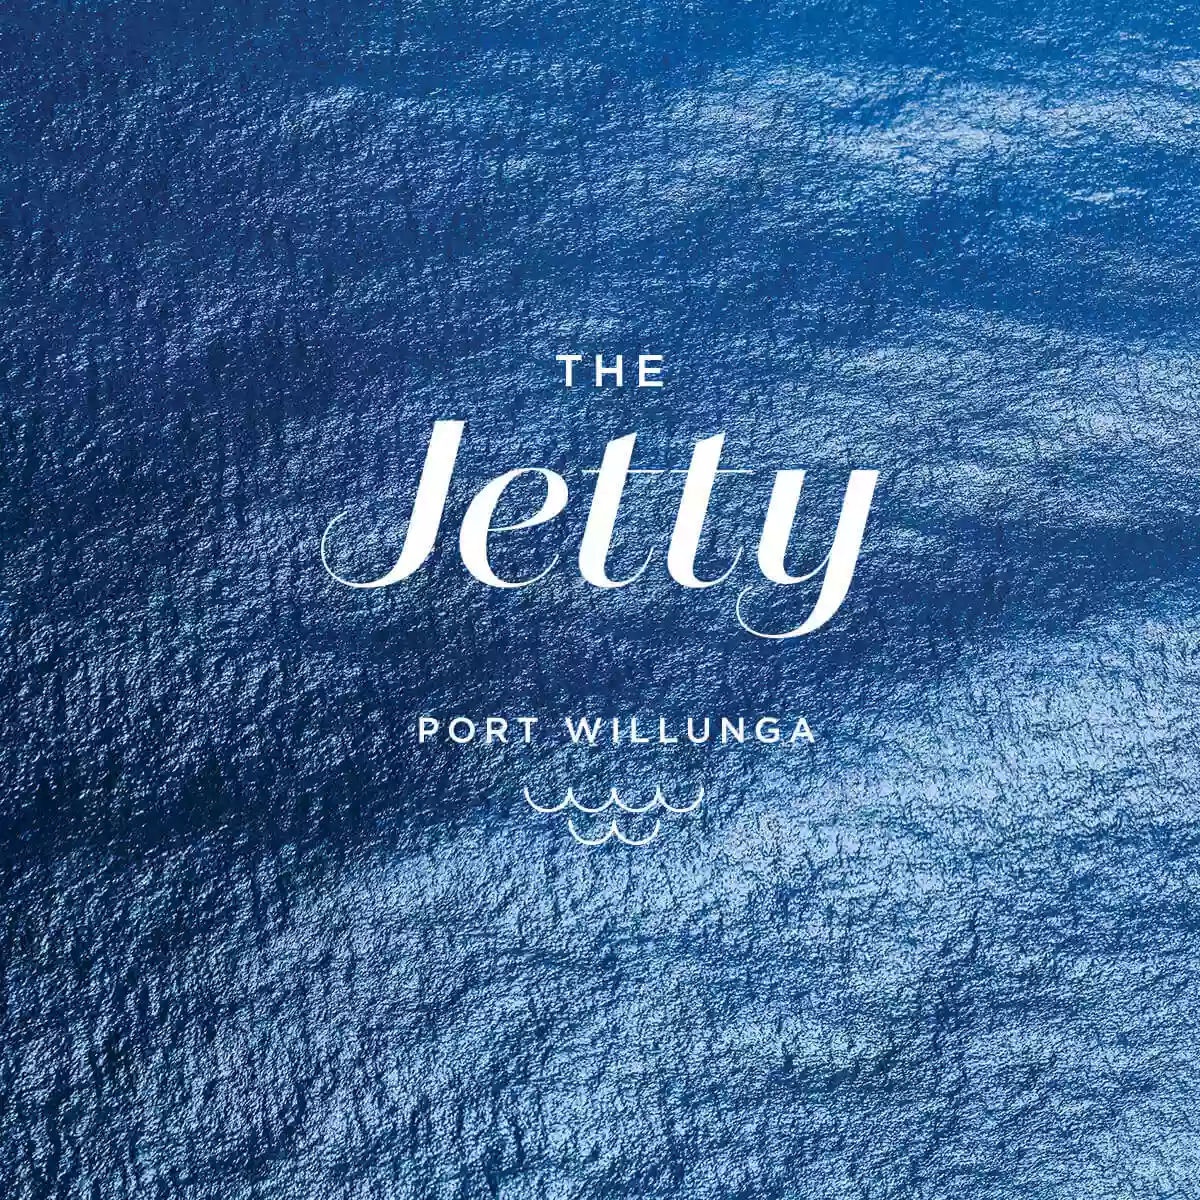 The Jetty, Port Willunga